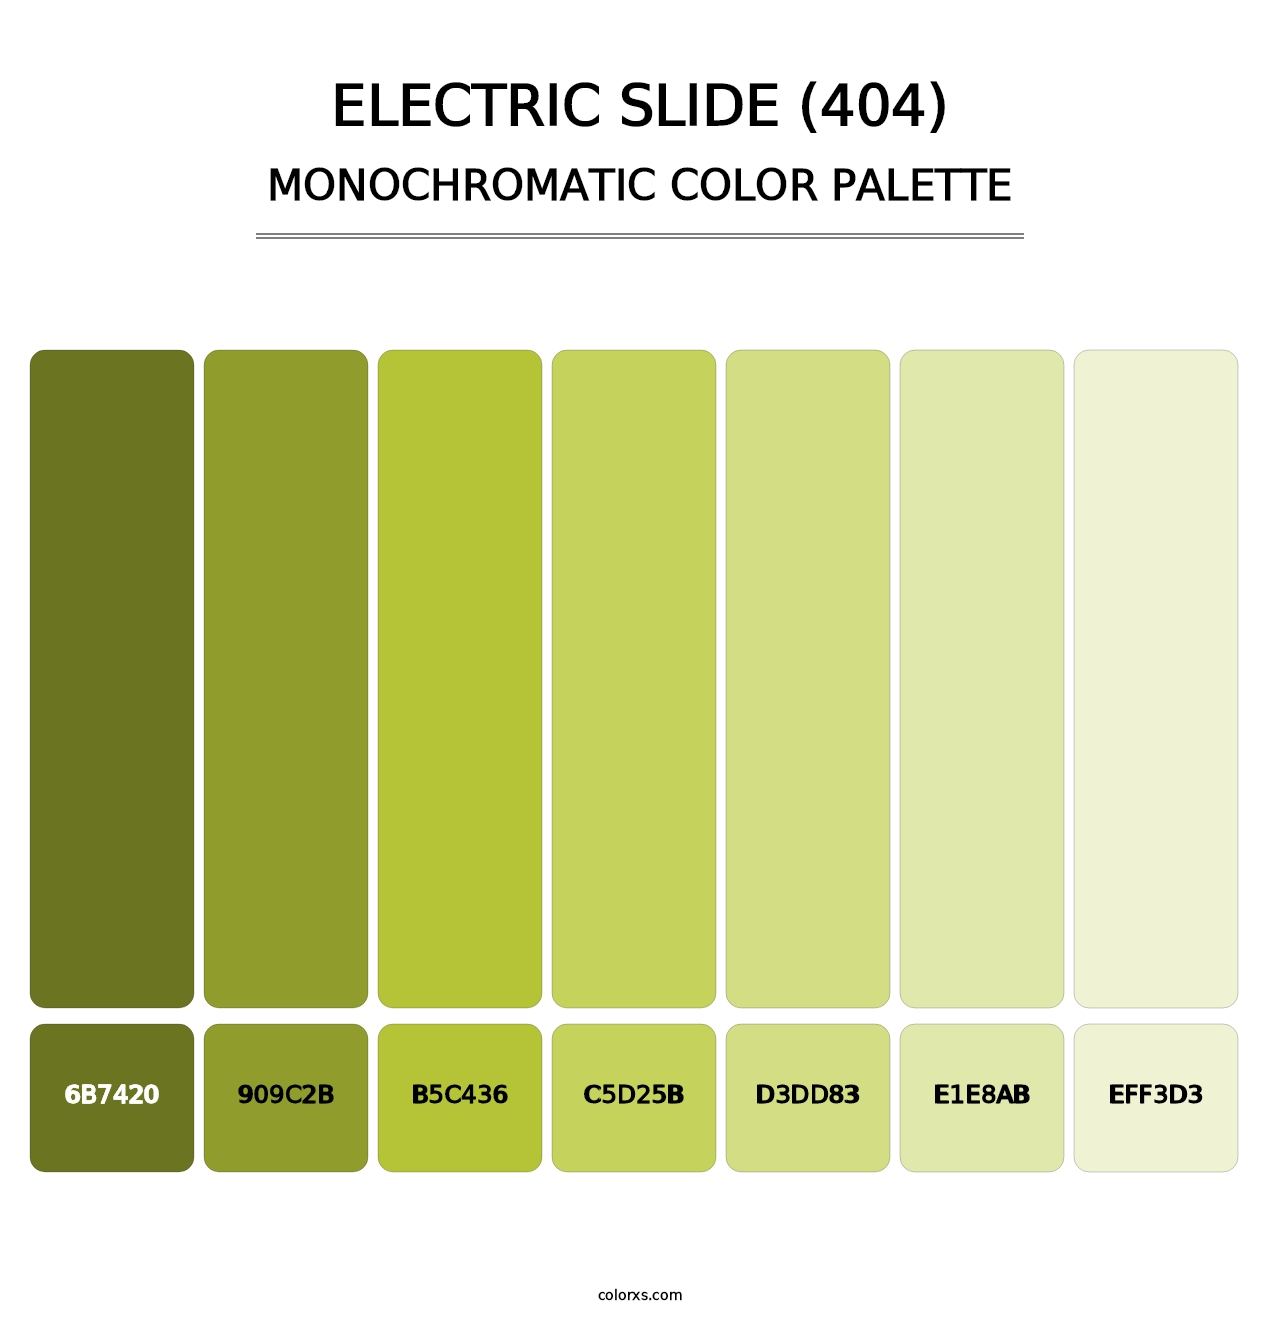 Electric Slide (404) - Monochromatic Color Palette